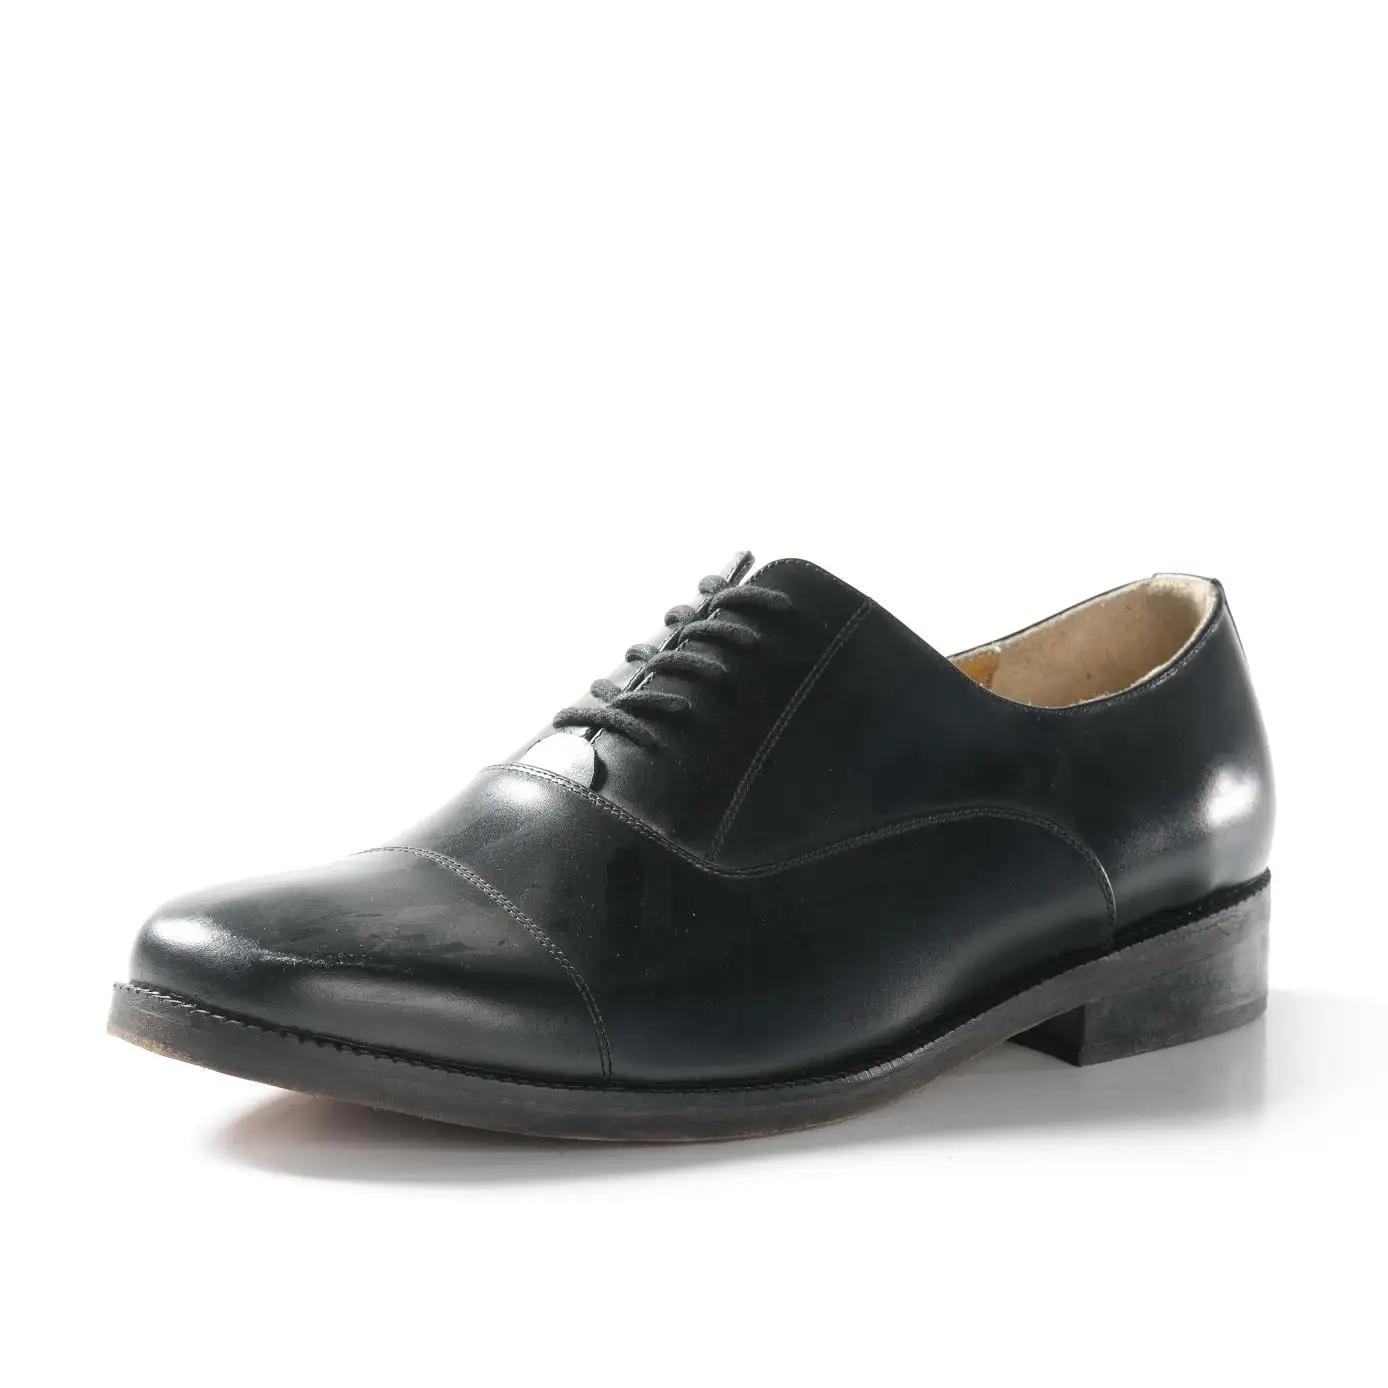 Black Color Office Shoes Leather Shoes For Men